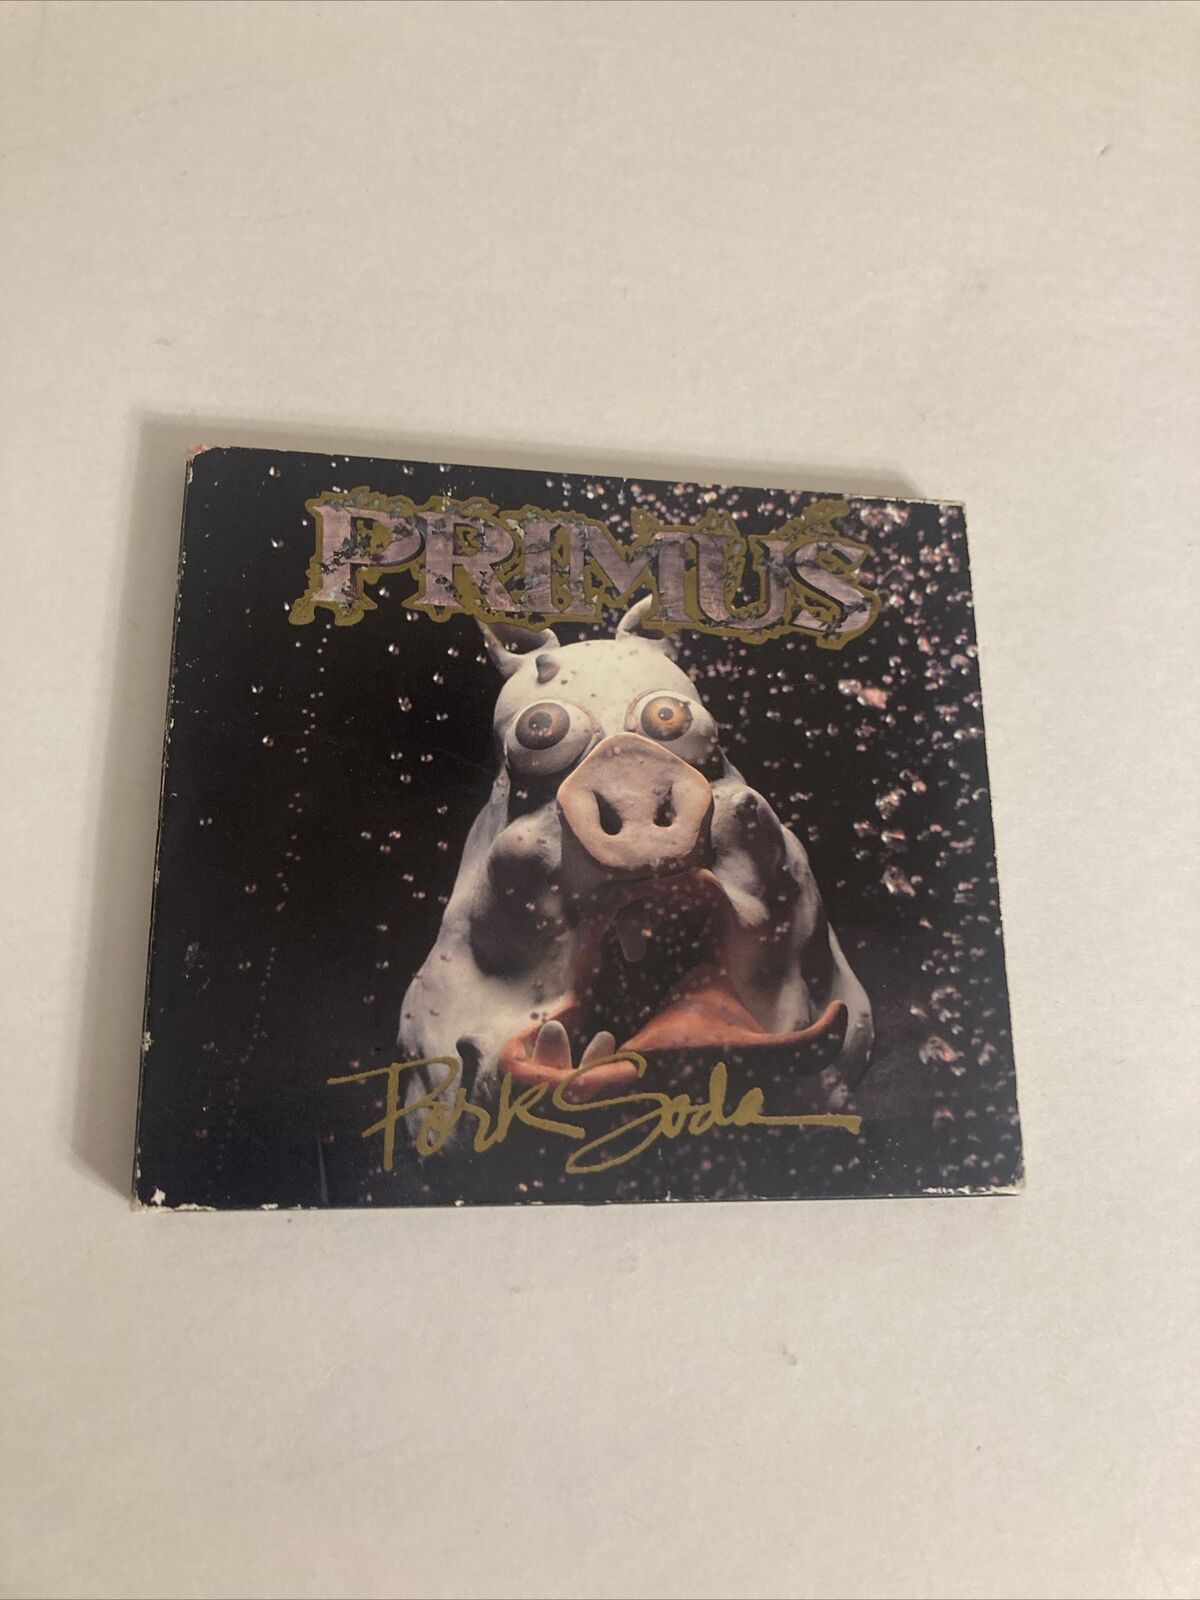 Primus : Pork Soda CD Digipak Interscope Records